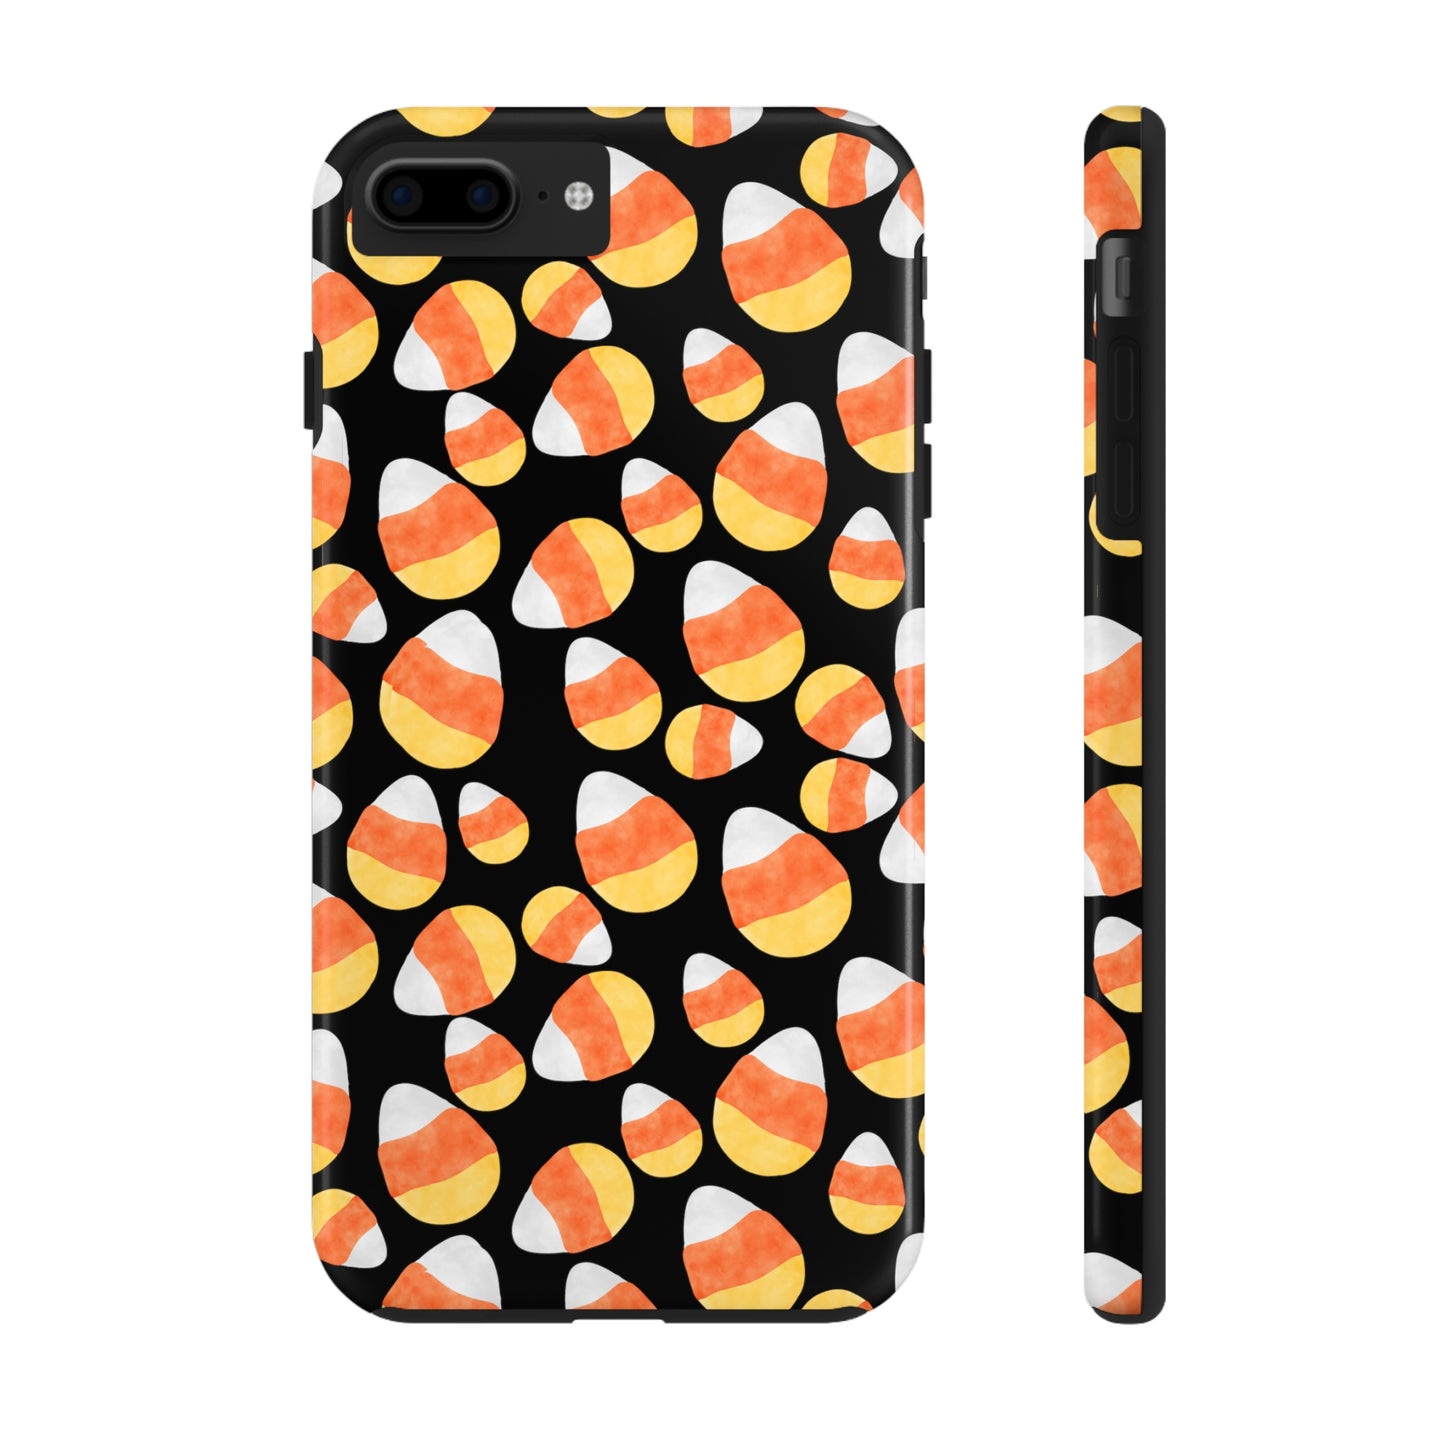 Halloween IPhone Case / Candy Corn Phone Case